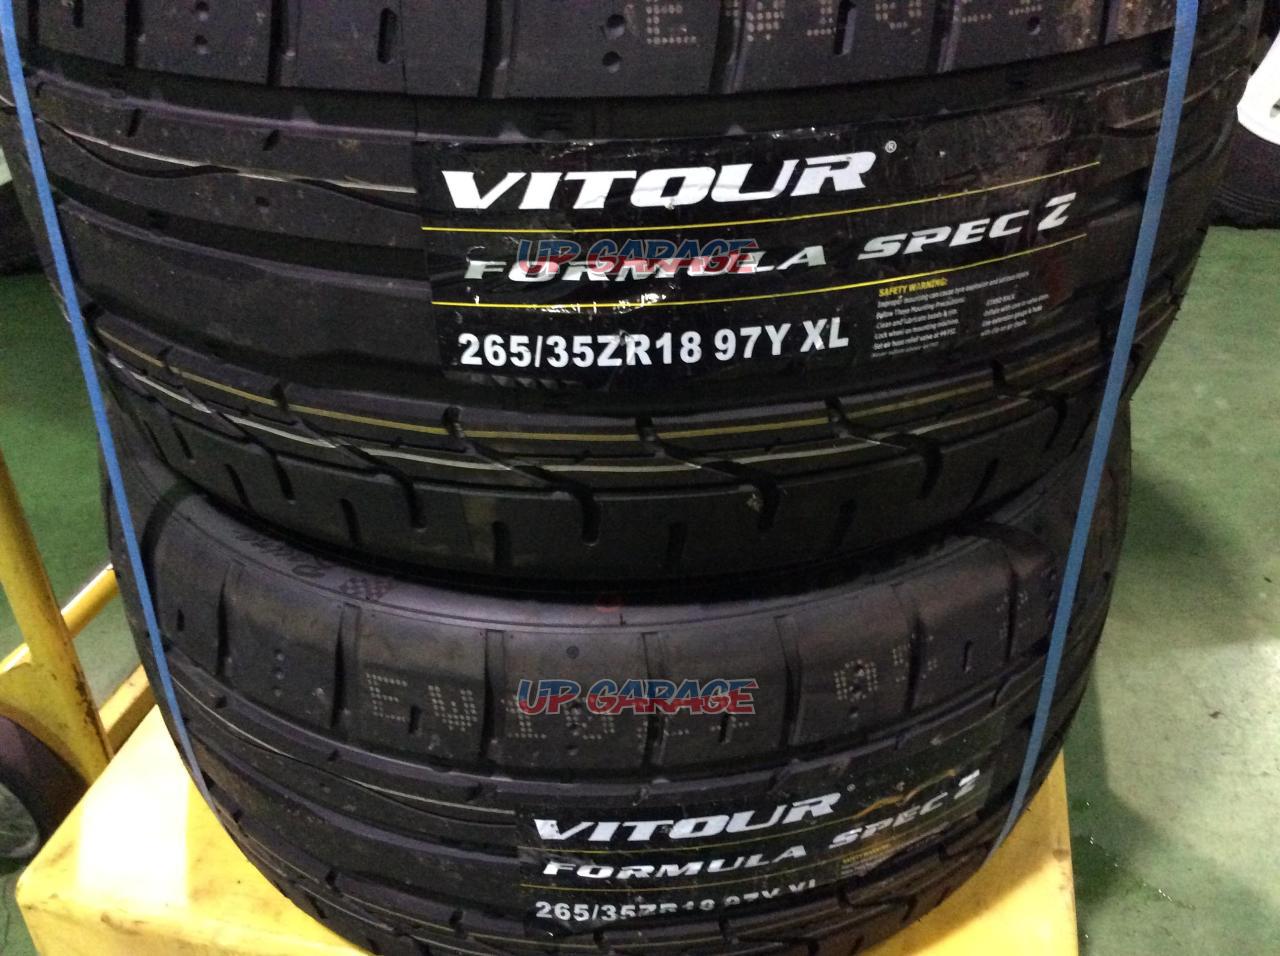 Vitour Formula Spec Z 265 35 18 Tire Only 18 Inch Tire Croooober